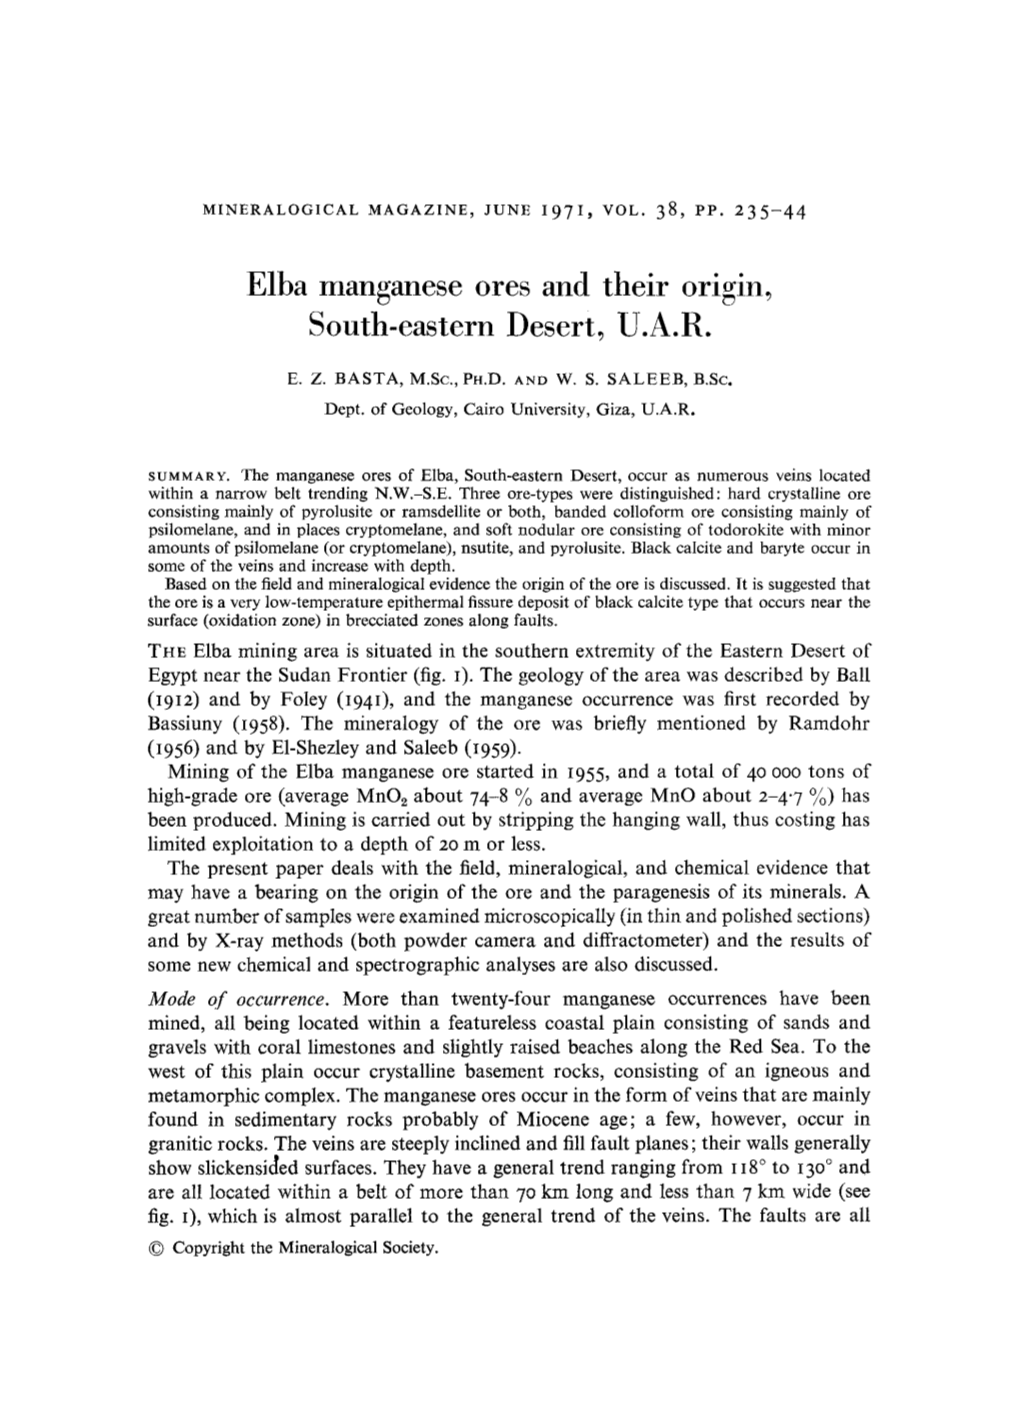 Elba Manganese Ores and Their Origin, South-Eastern Desert, U.A.R